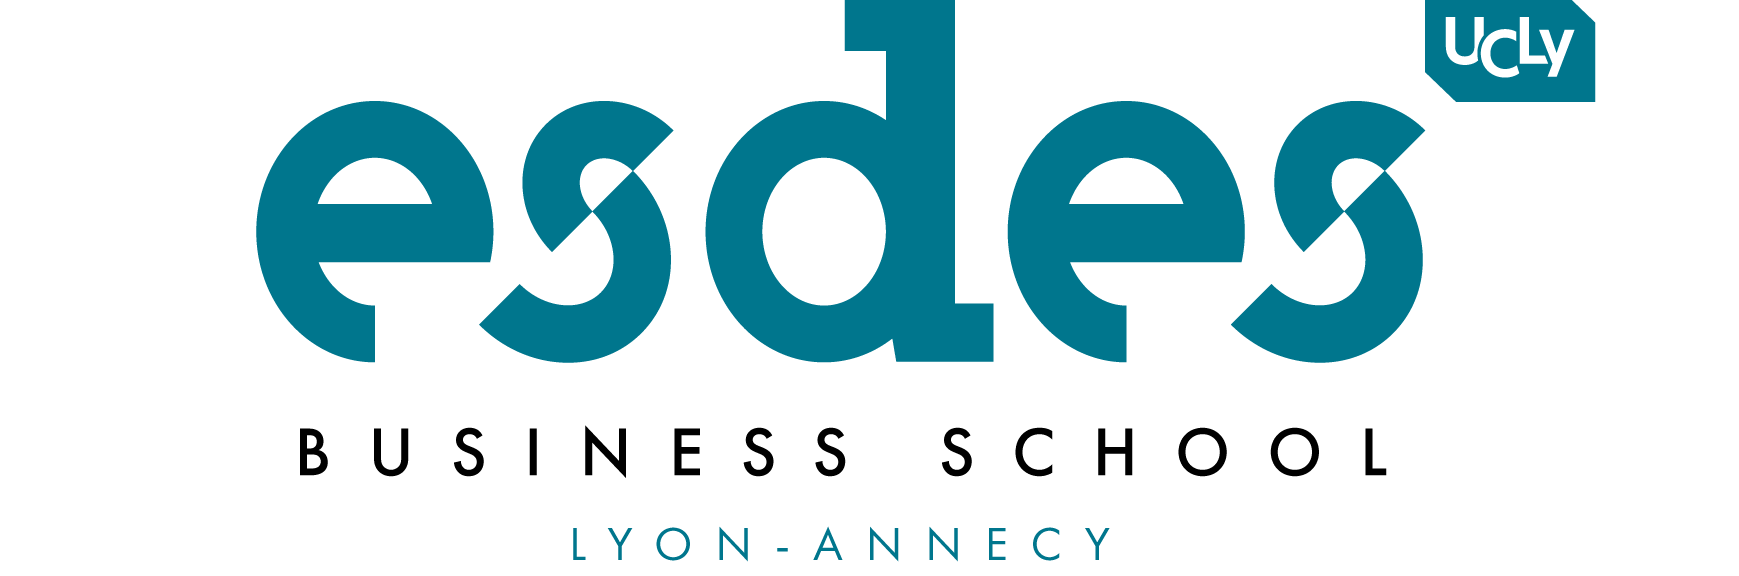 ESDES logo